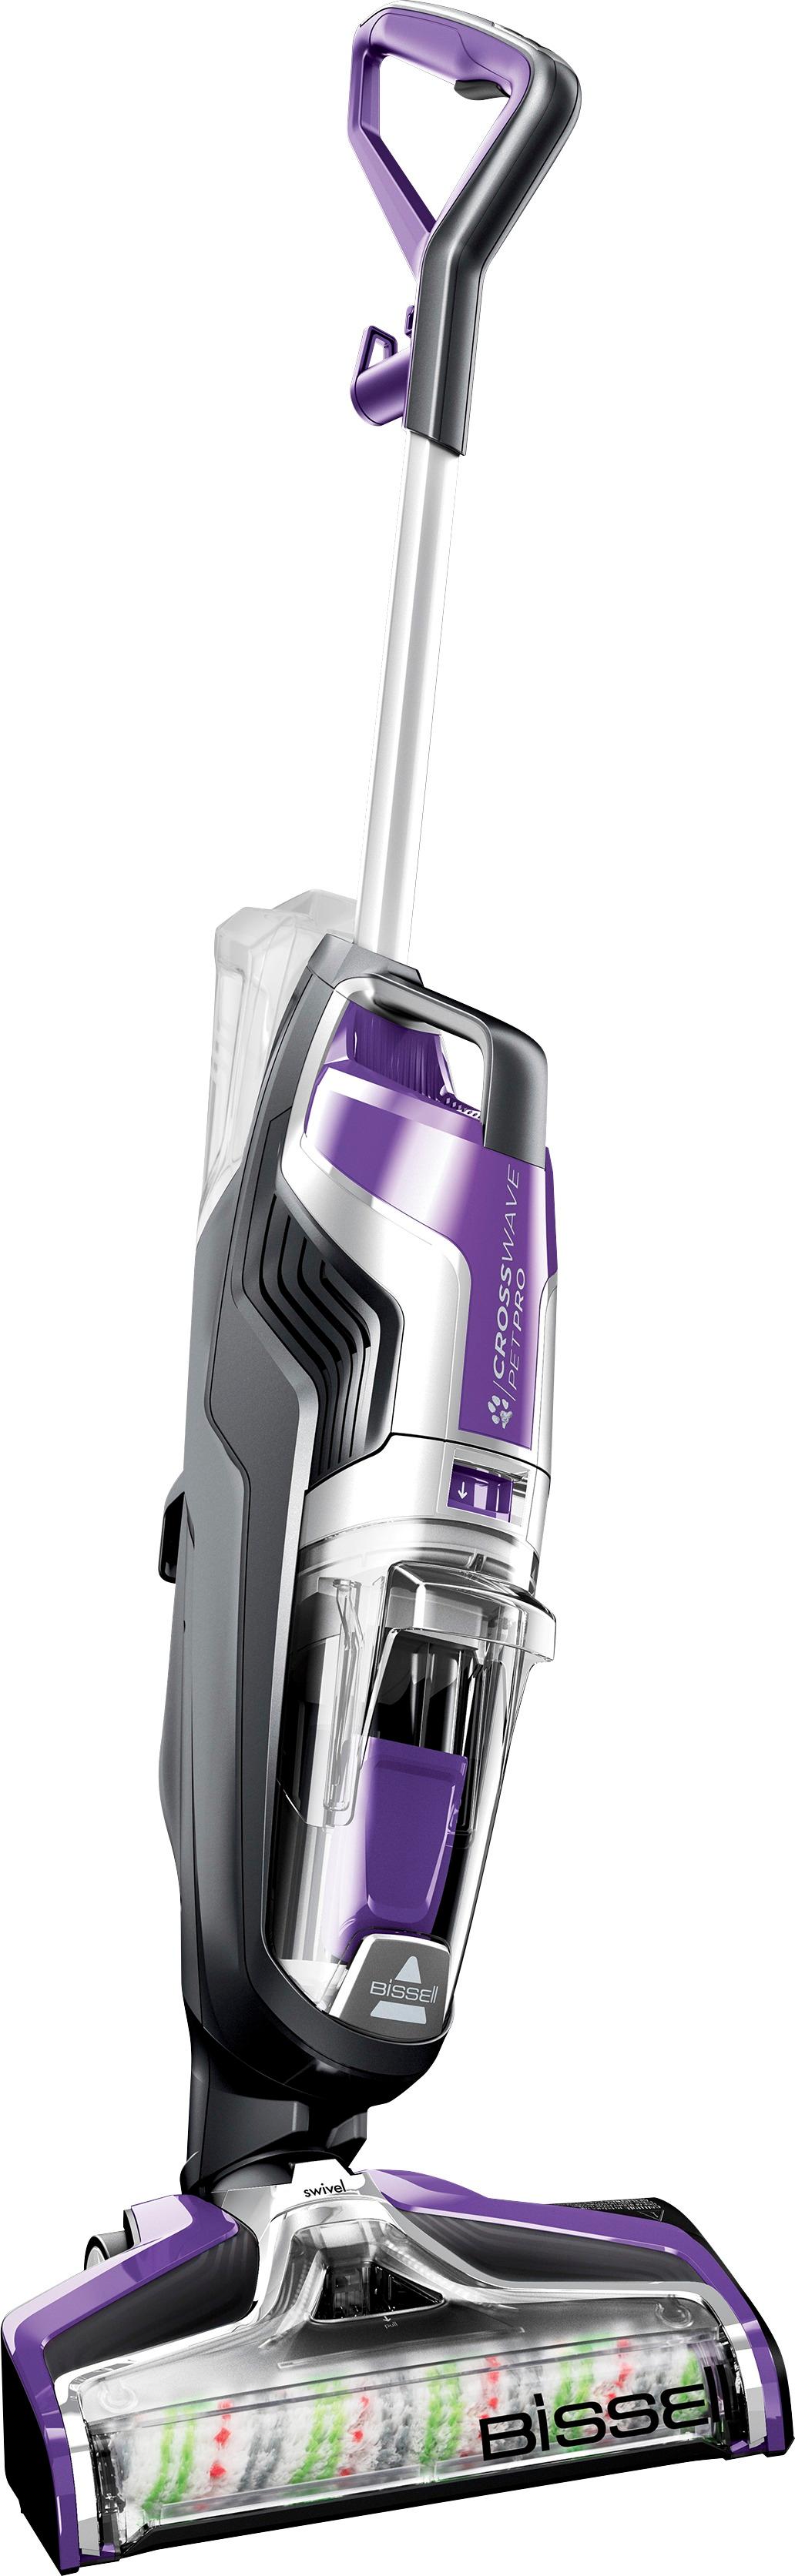 Bissell 2306 CrossWave Pet Pro Wet-Dry Vacuum Cleaner - Purple NEW!!!  11120243345